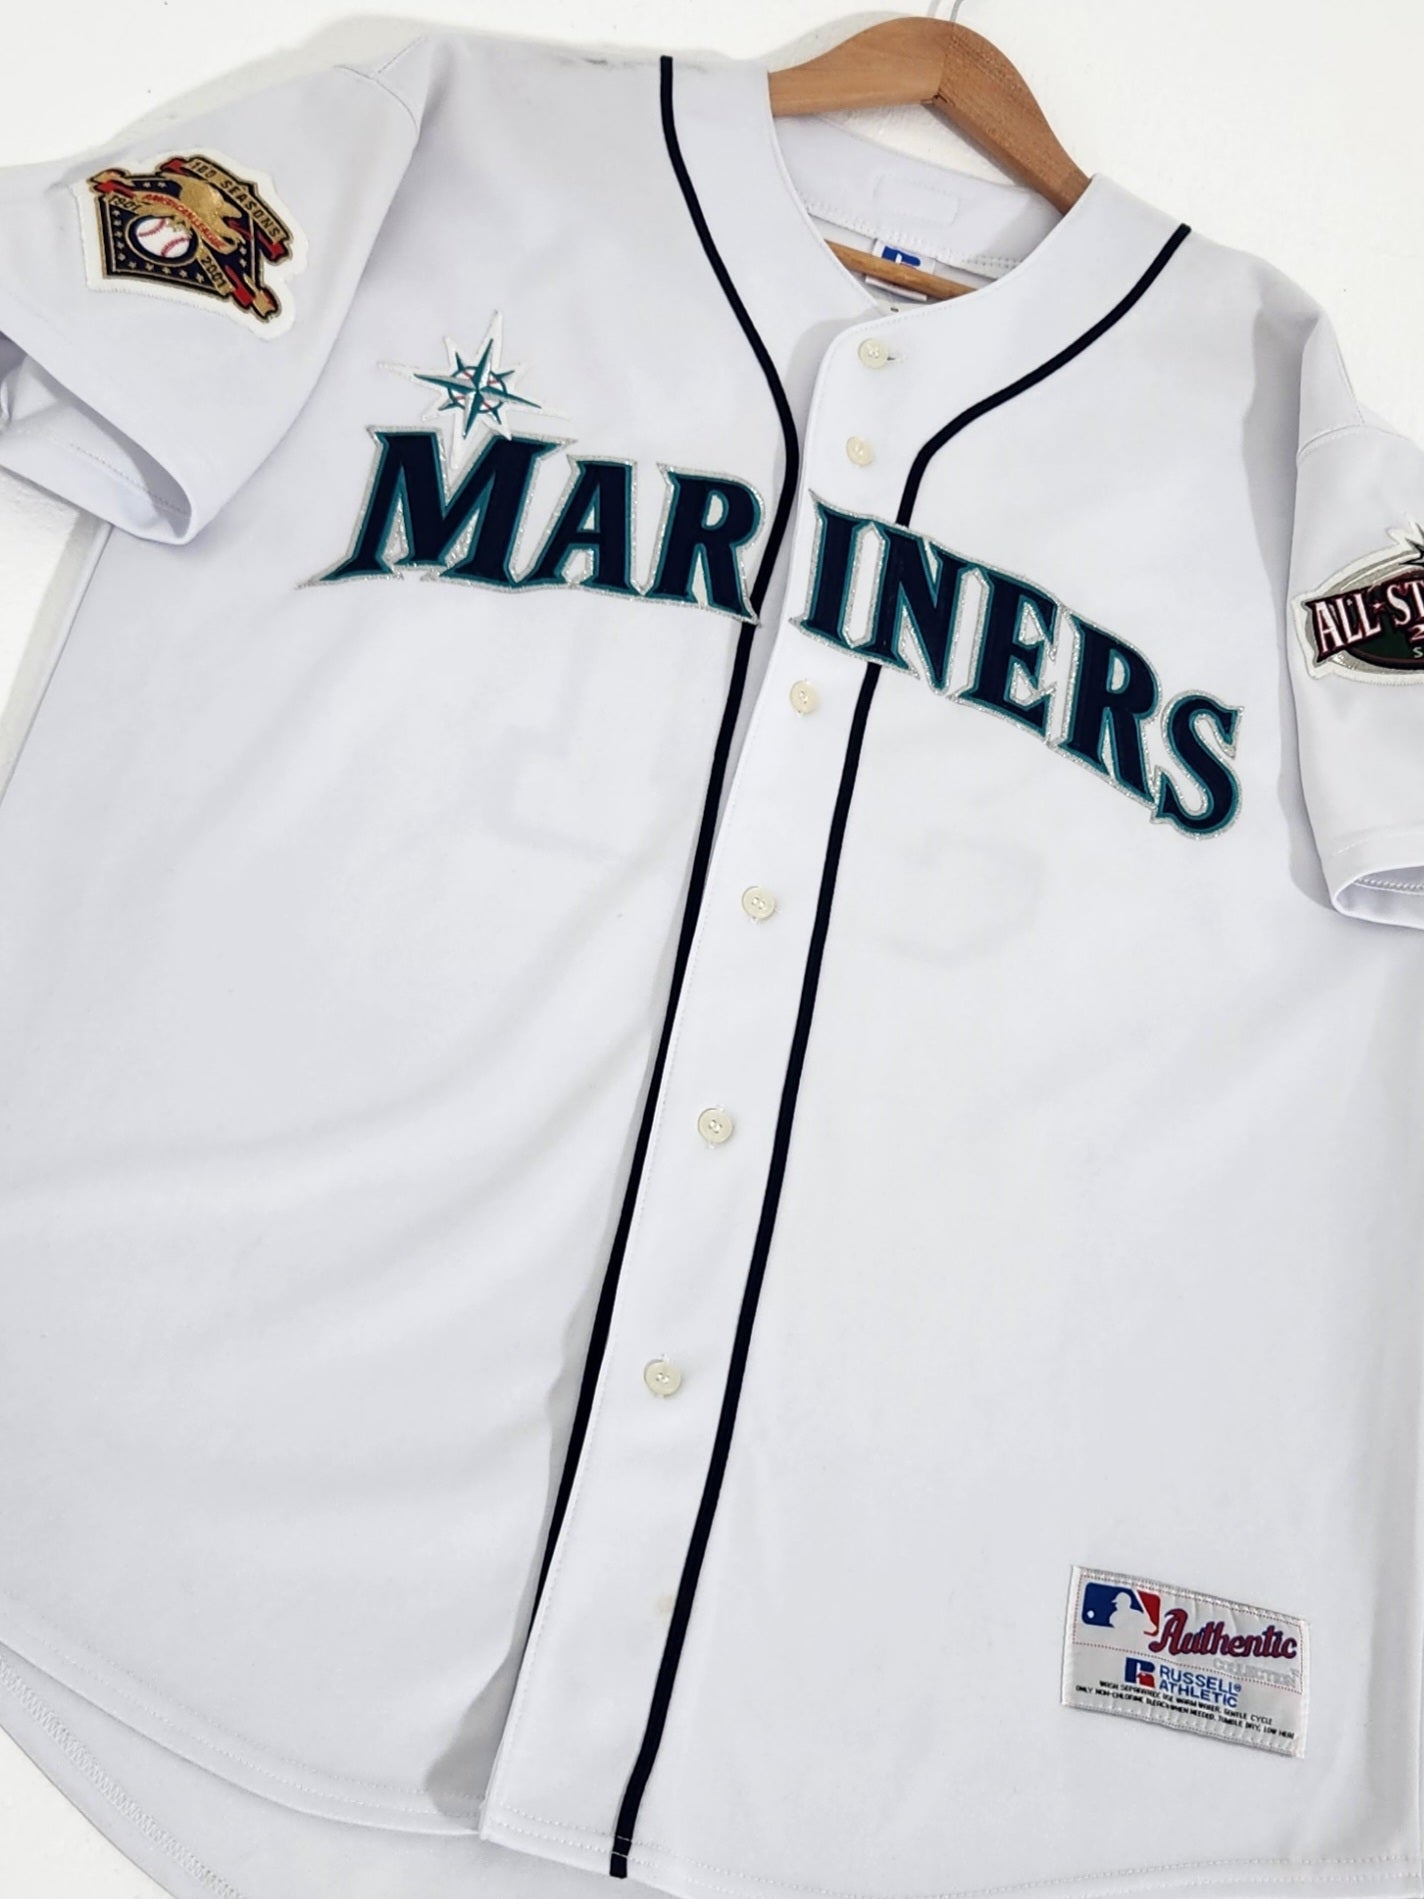 Ichiro Suzuki All-Star Game MLB Jerseys for sale